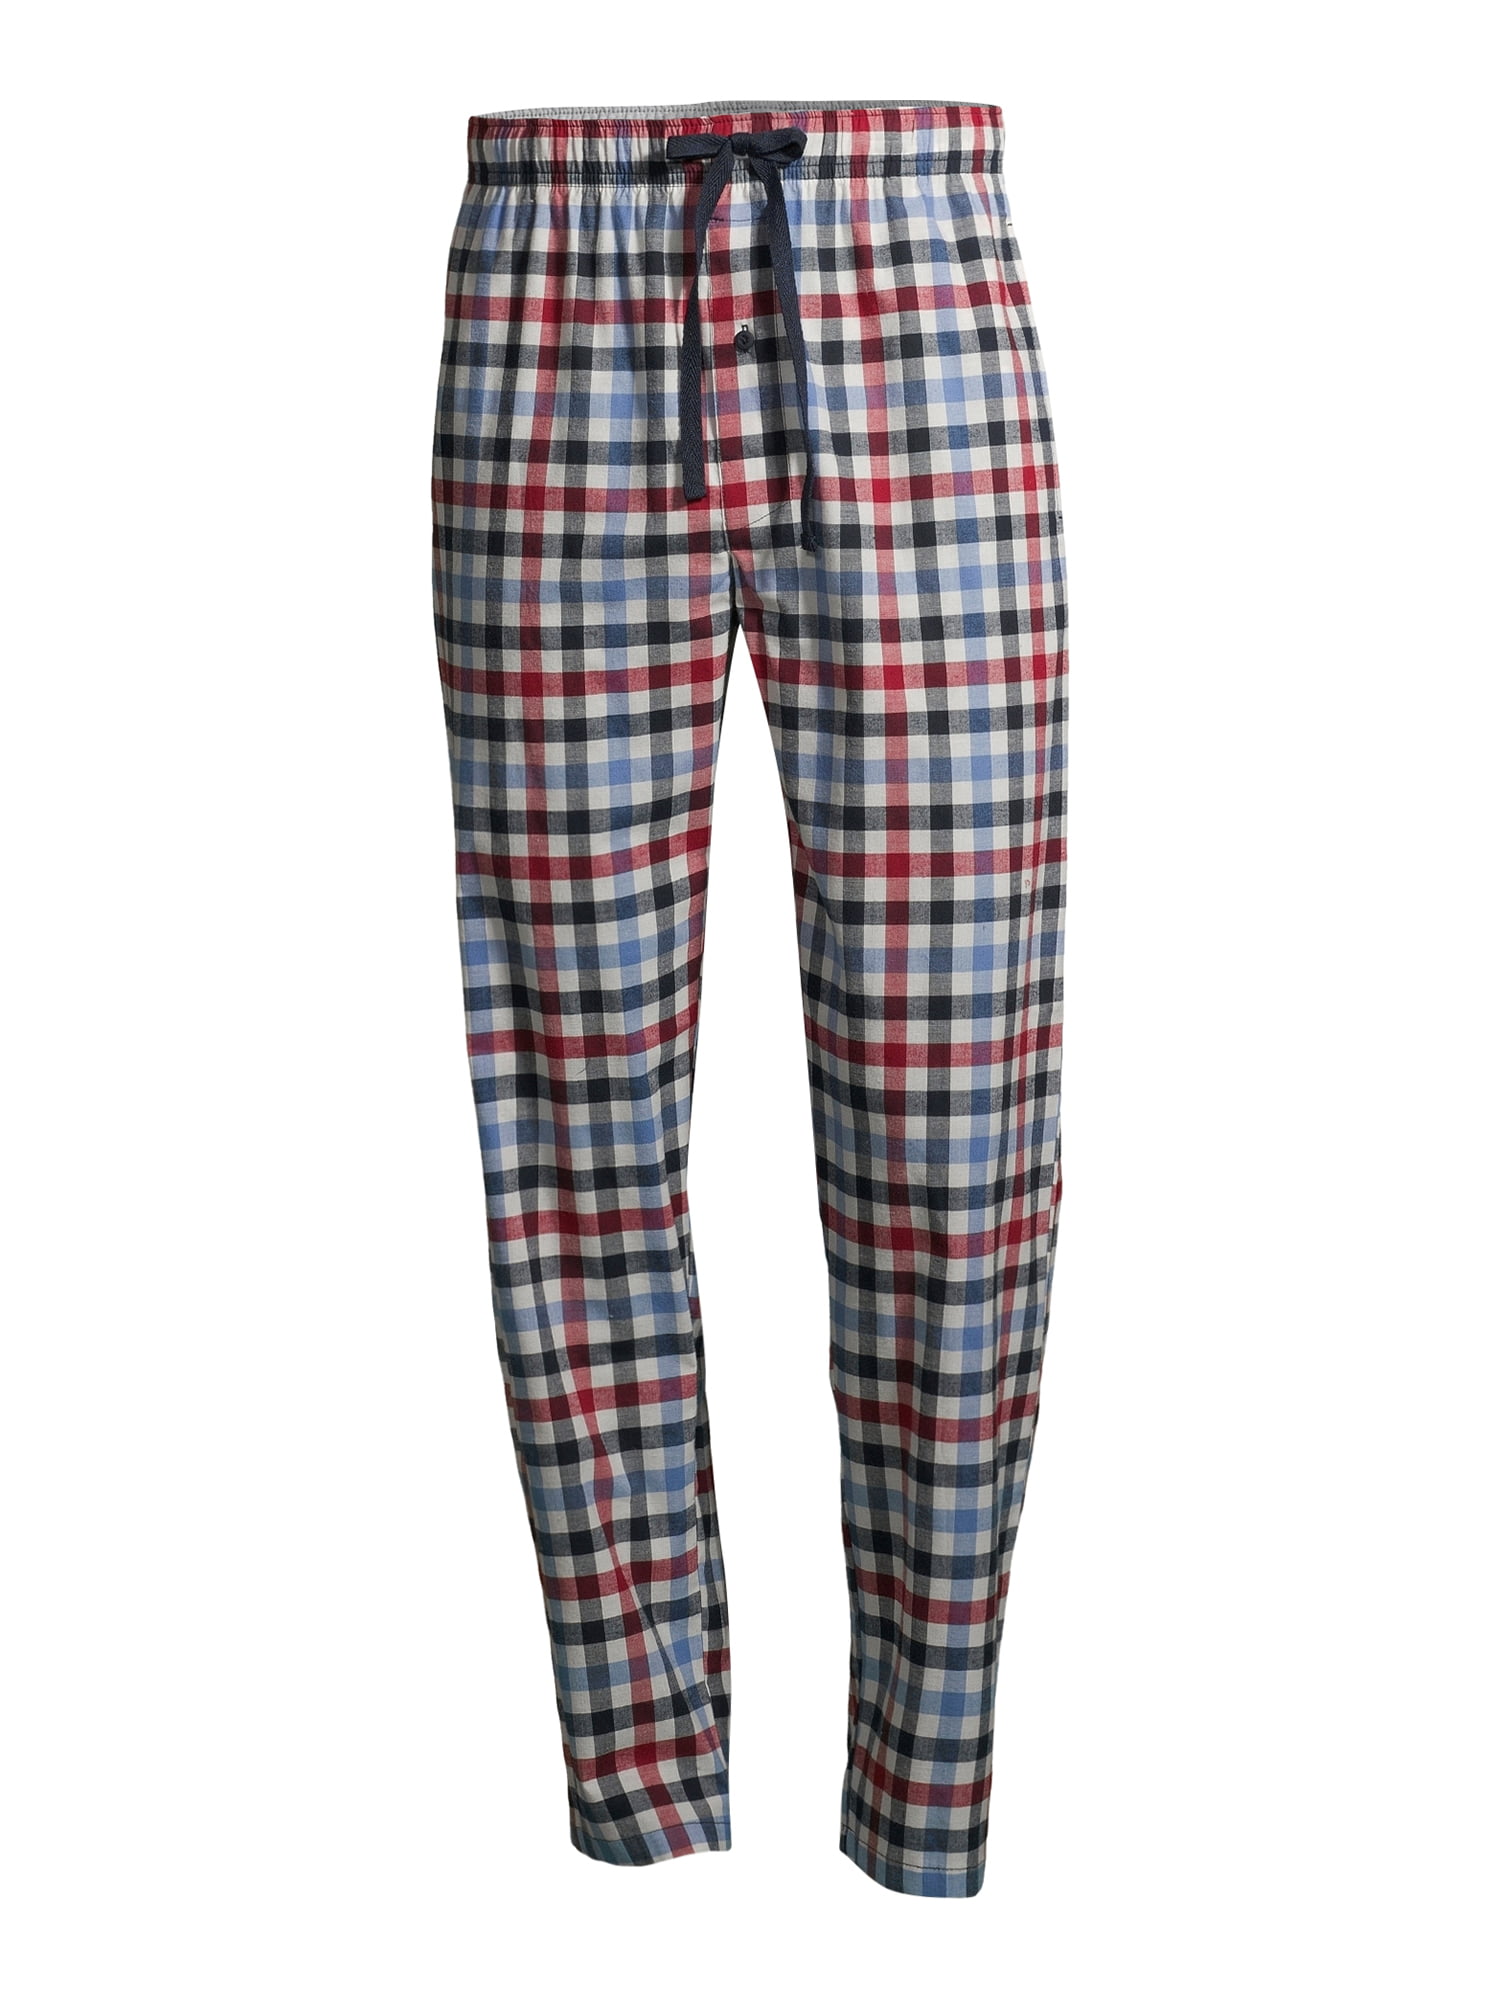 Hanes Men's Big Woven Pajama Pant 